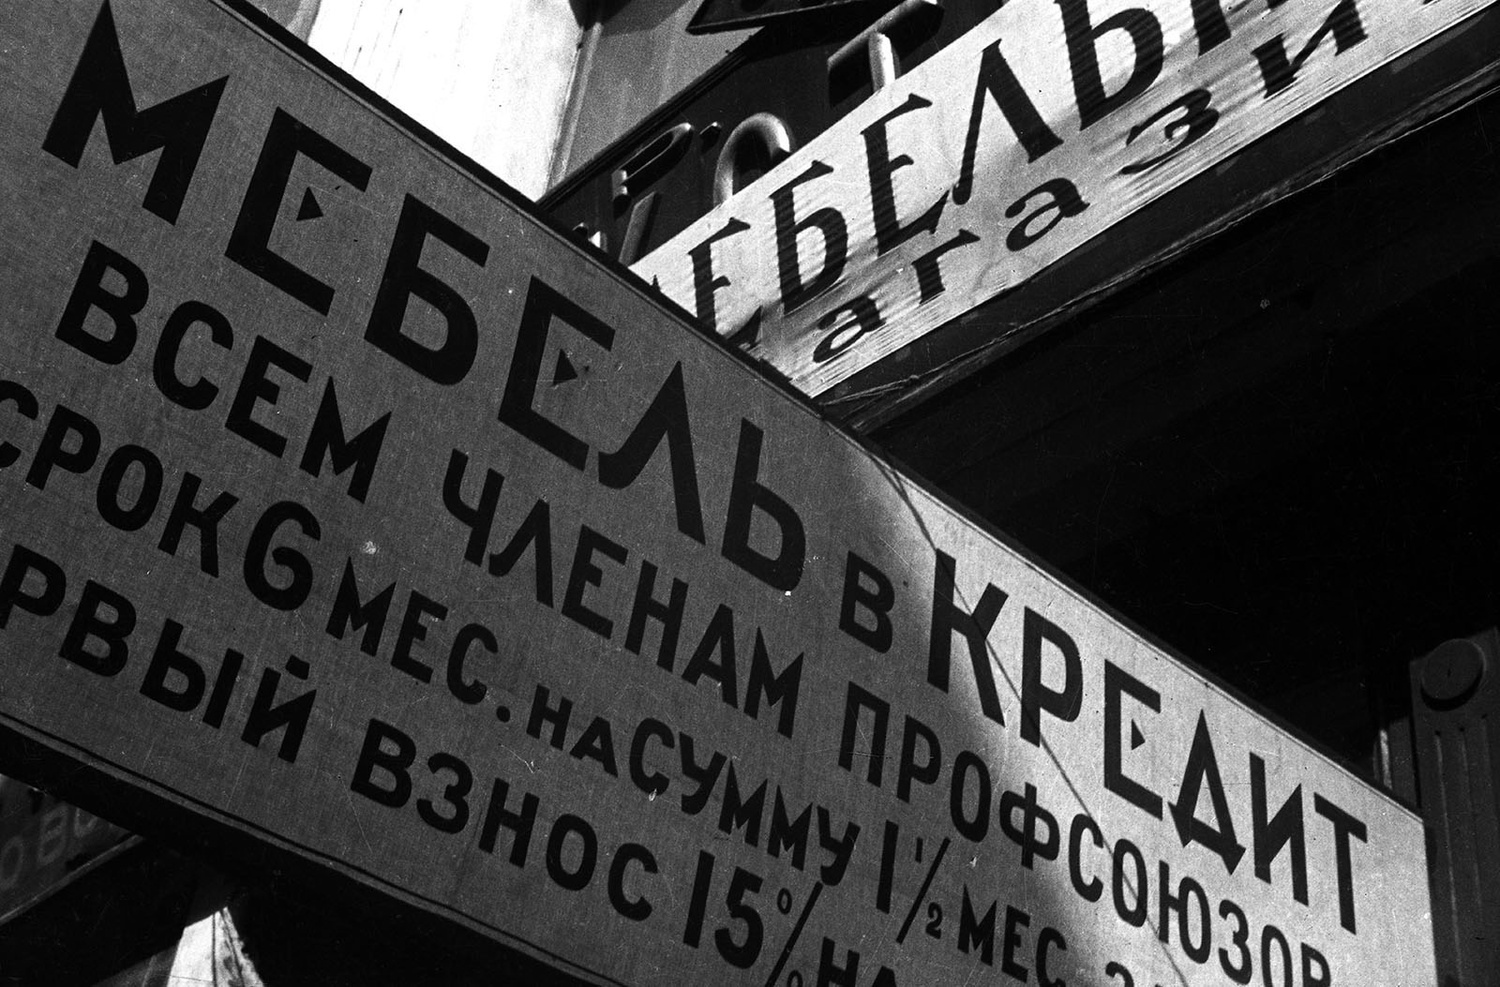 1920-1930-е годы. Советский Союз на снимках Бориса  Игнатовича.